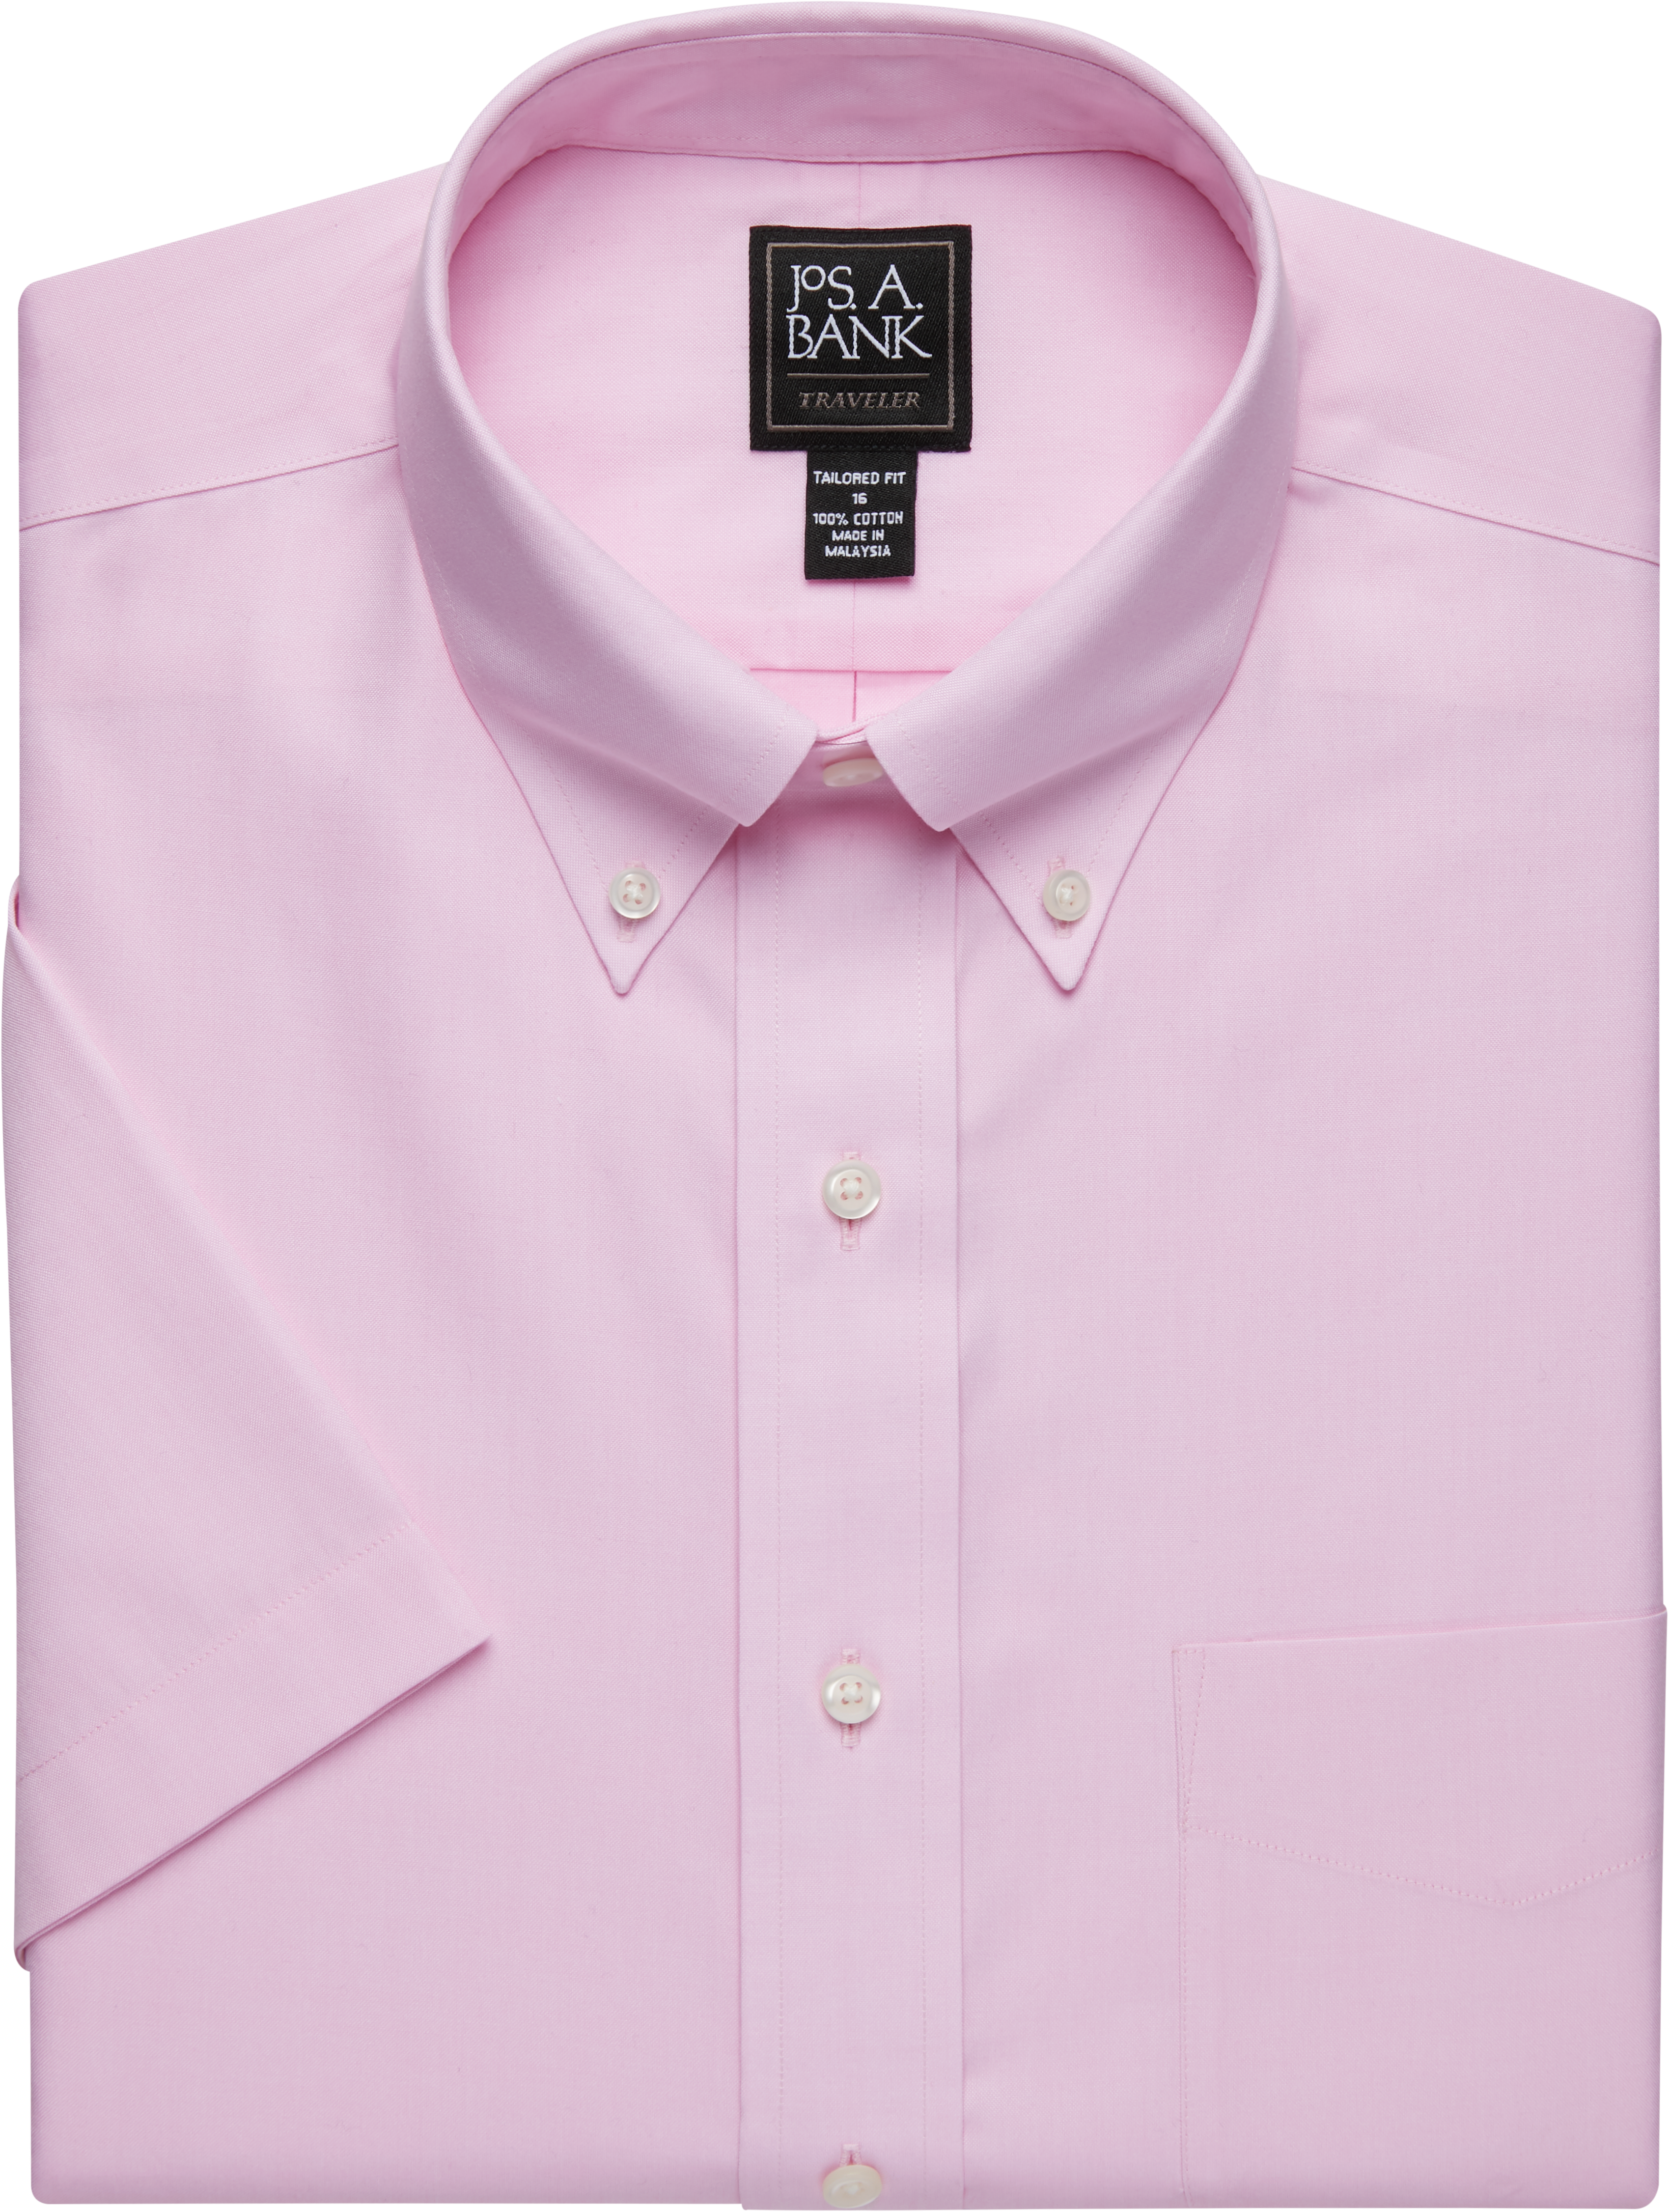 Best Men's Dress Shirts Sale Online | Jos A. Bank